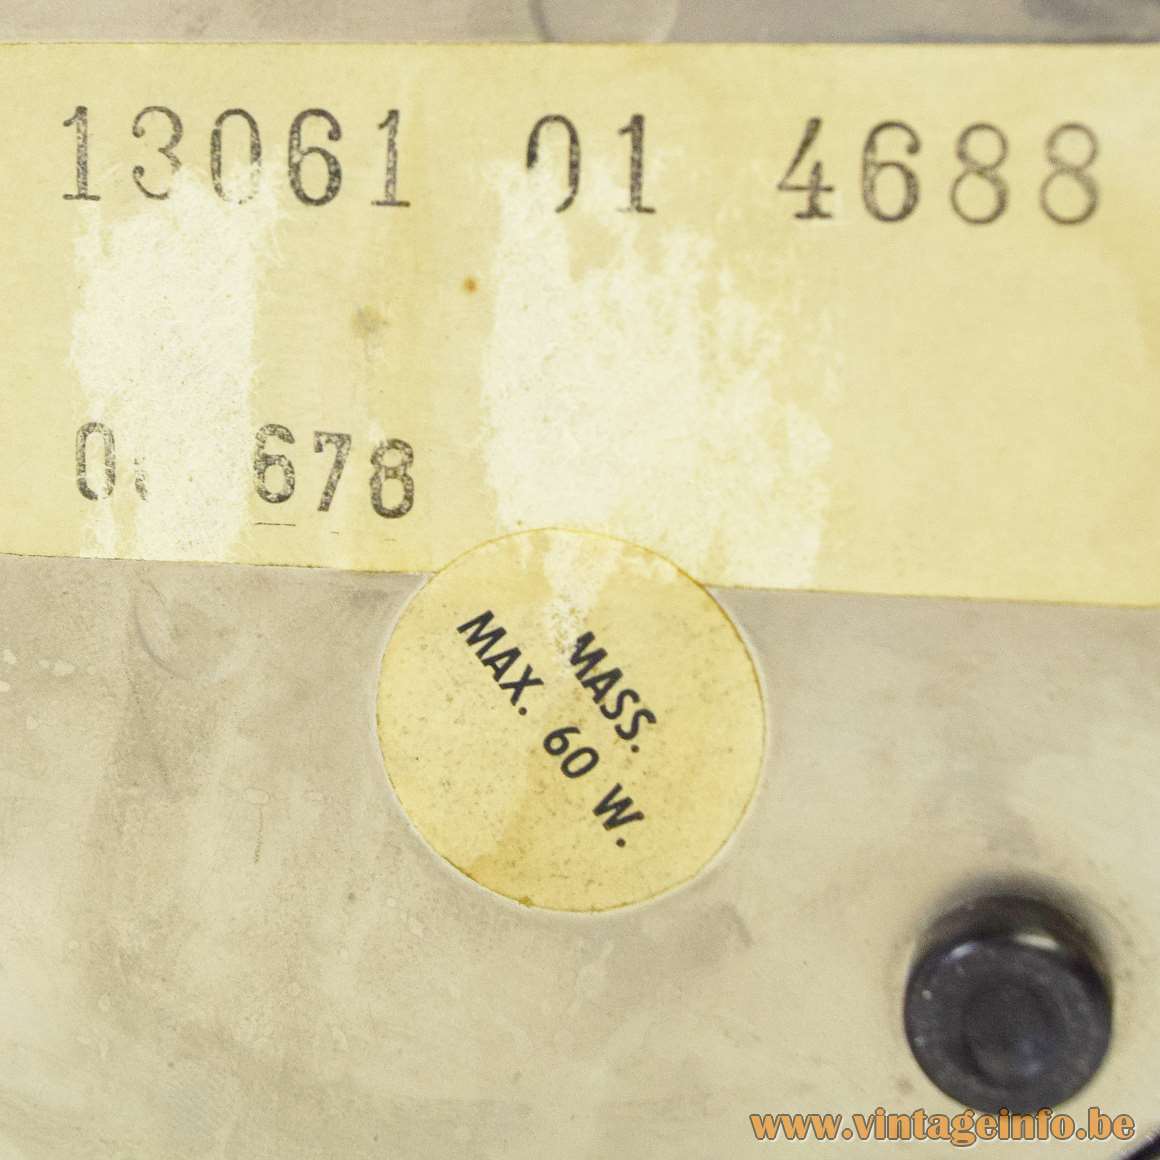 Massive Belgium 1960s 1970s round paper label Mass. Max. 60 W. + rectangular label with numbers